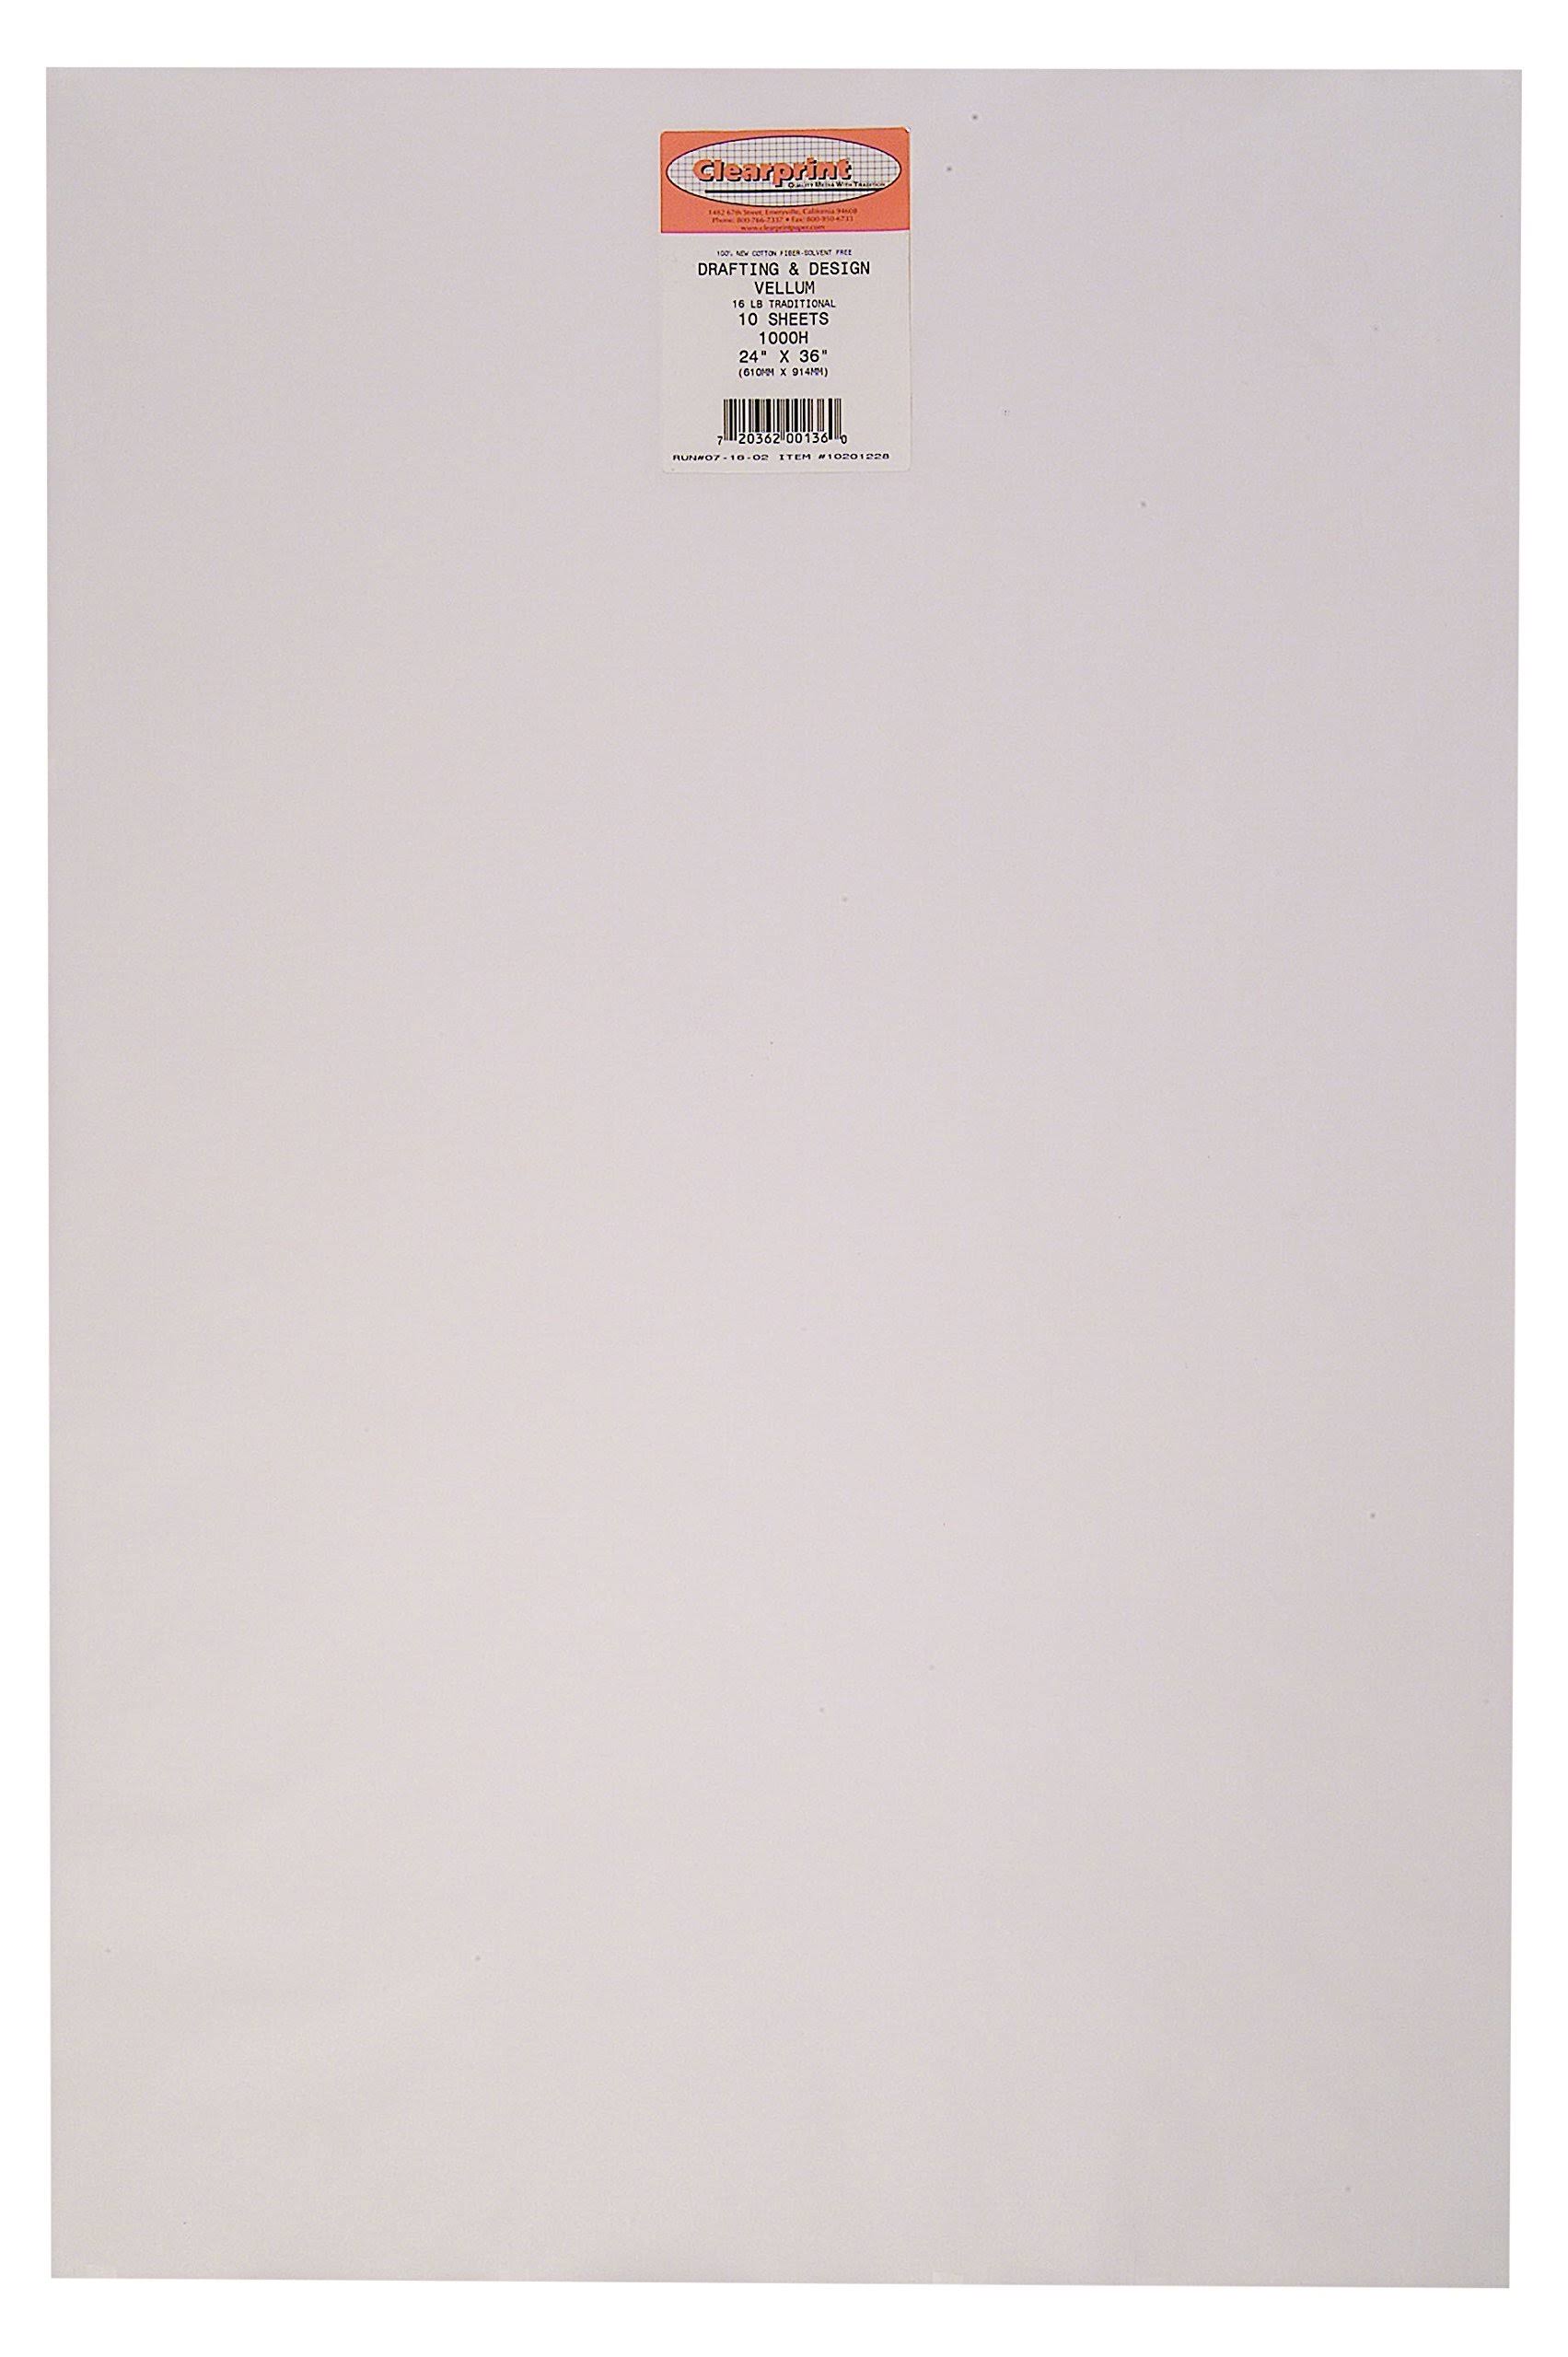 Clearprint 1000H Design Vellum Sheets - Translucent White, 16lbs, 24"x36", 10/pk